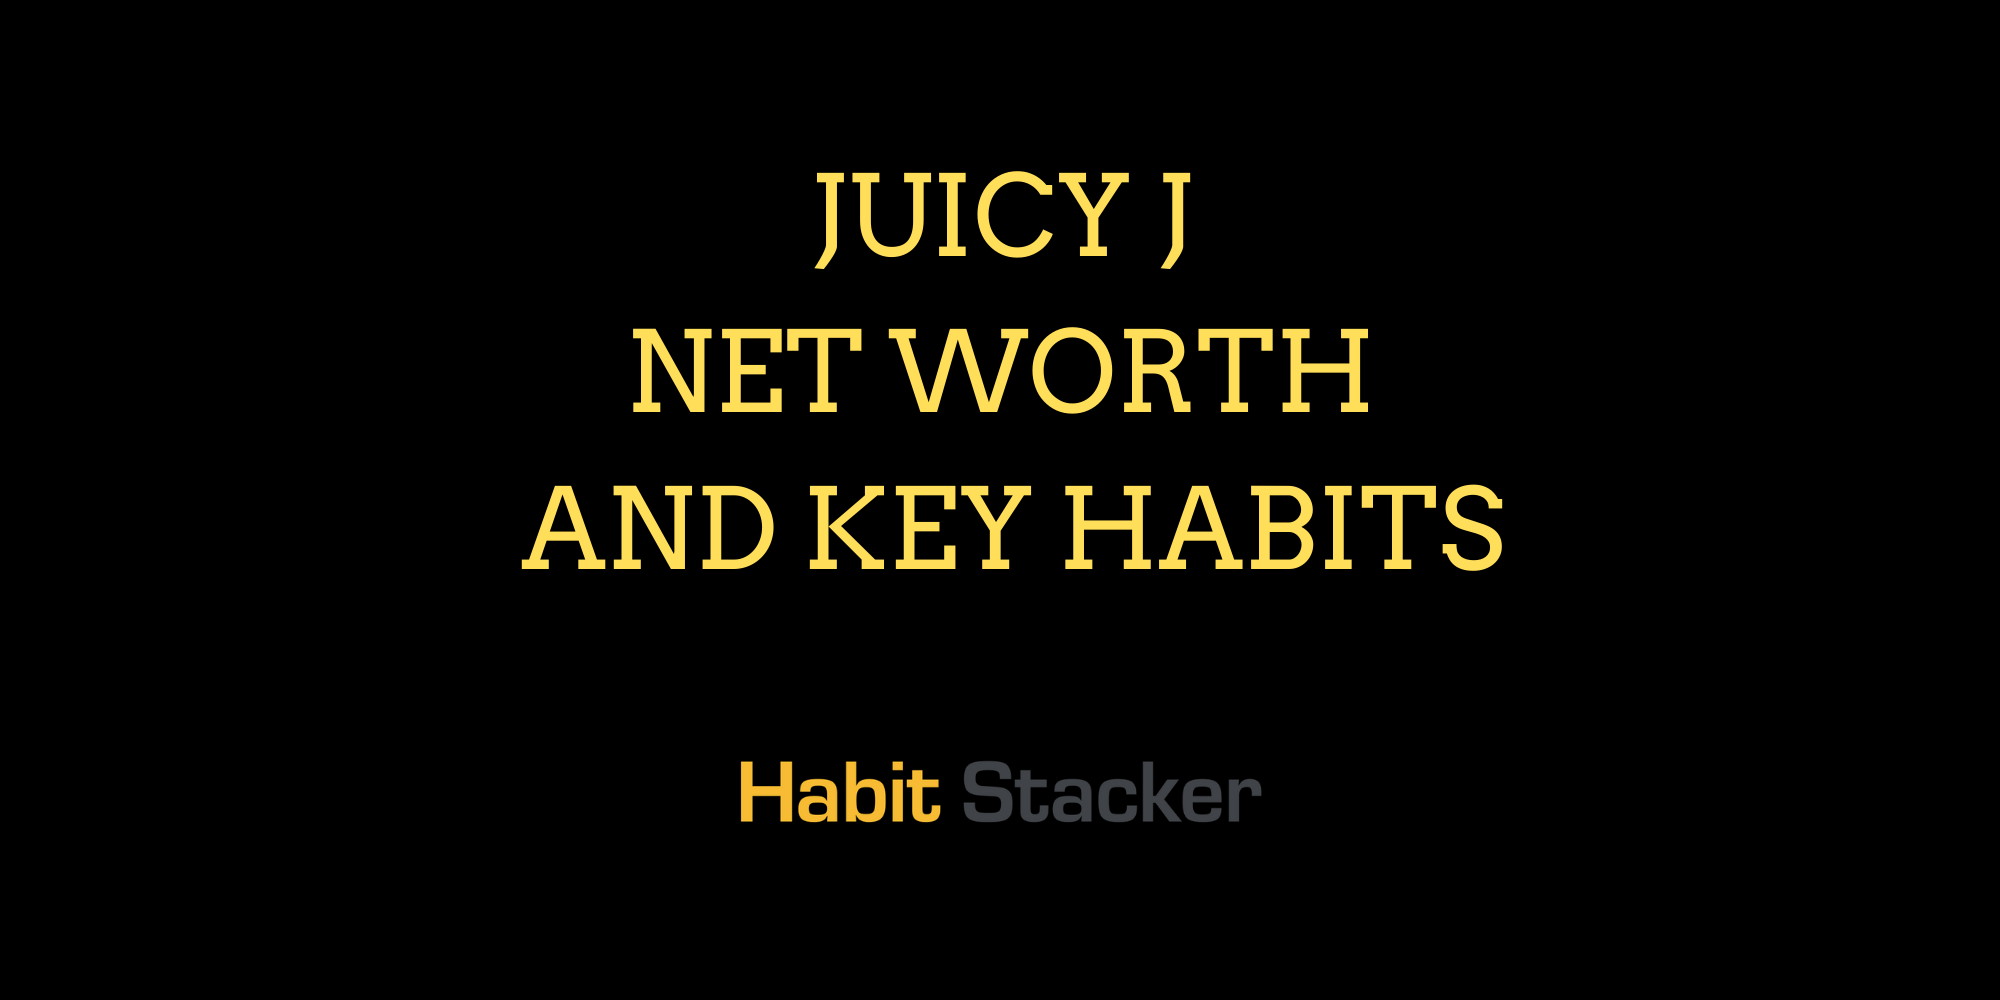 Juicy J Net Worth and Key Habits